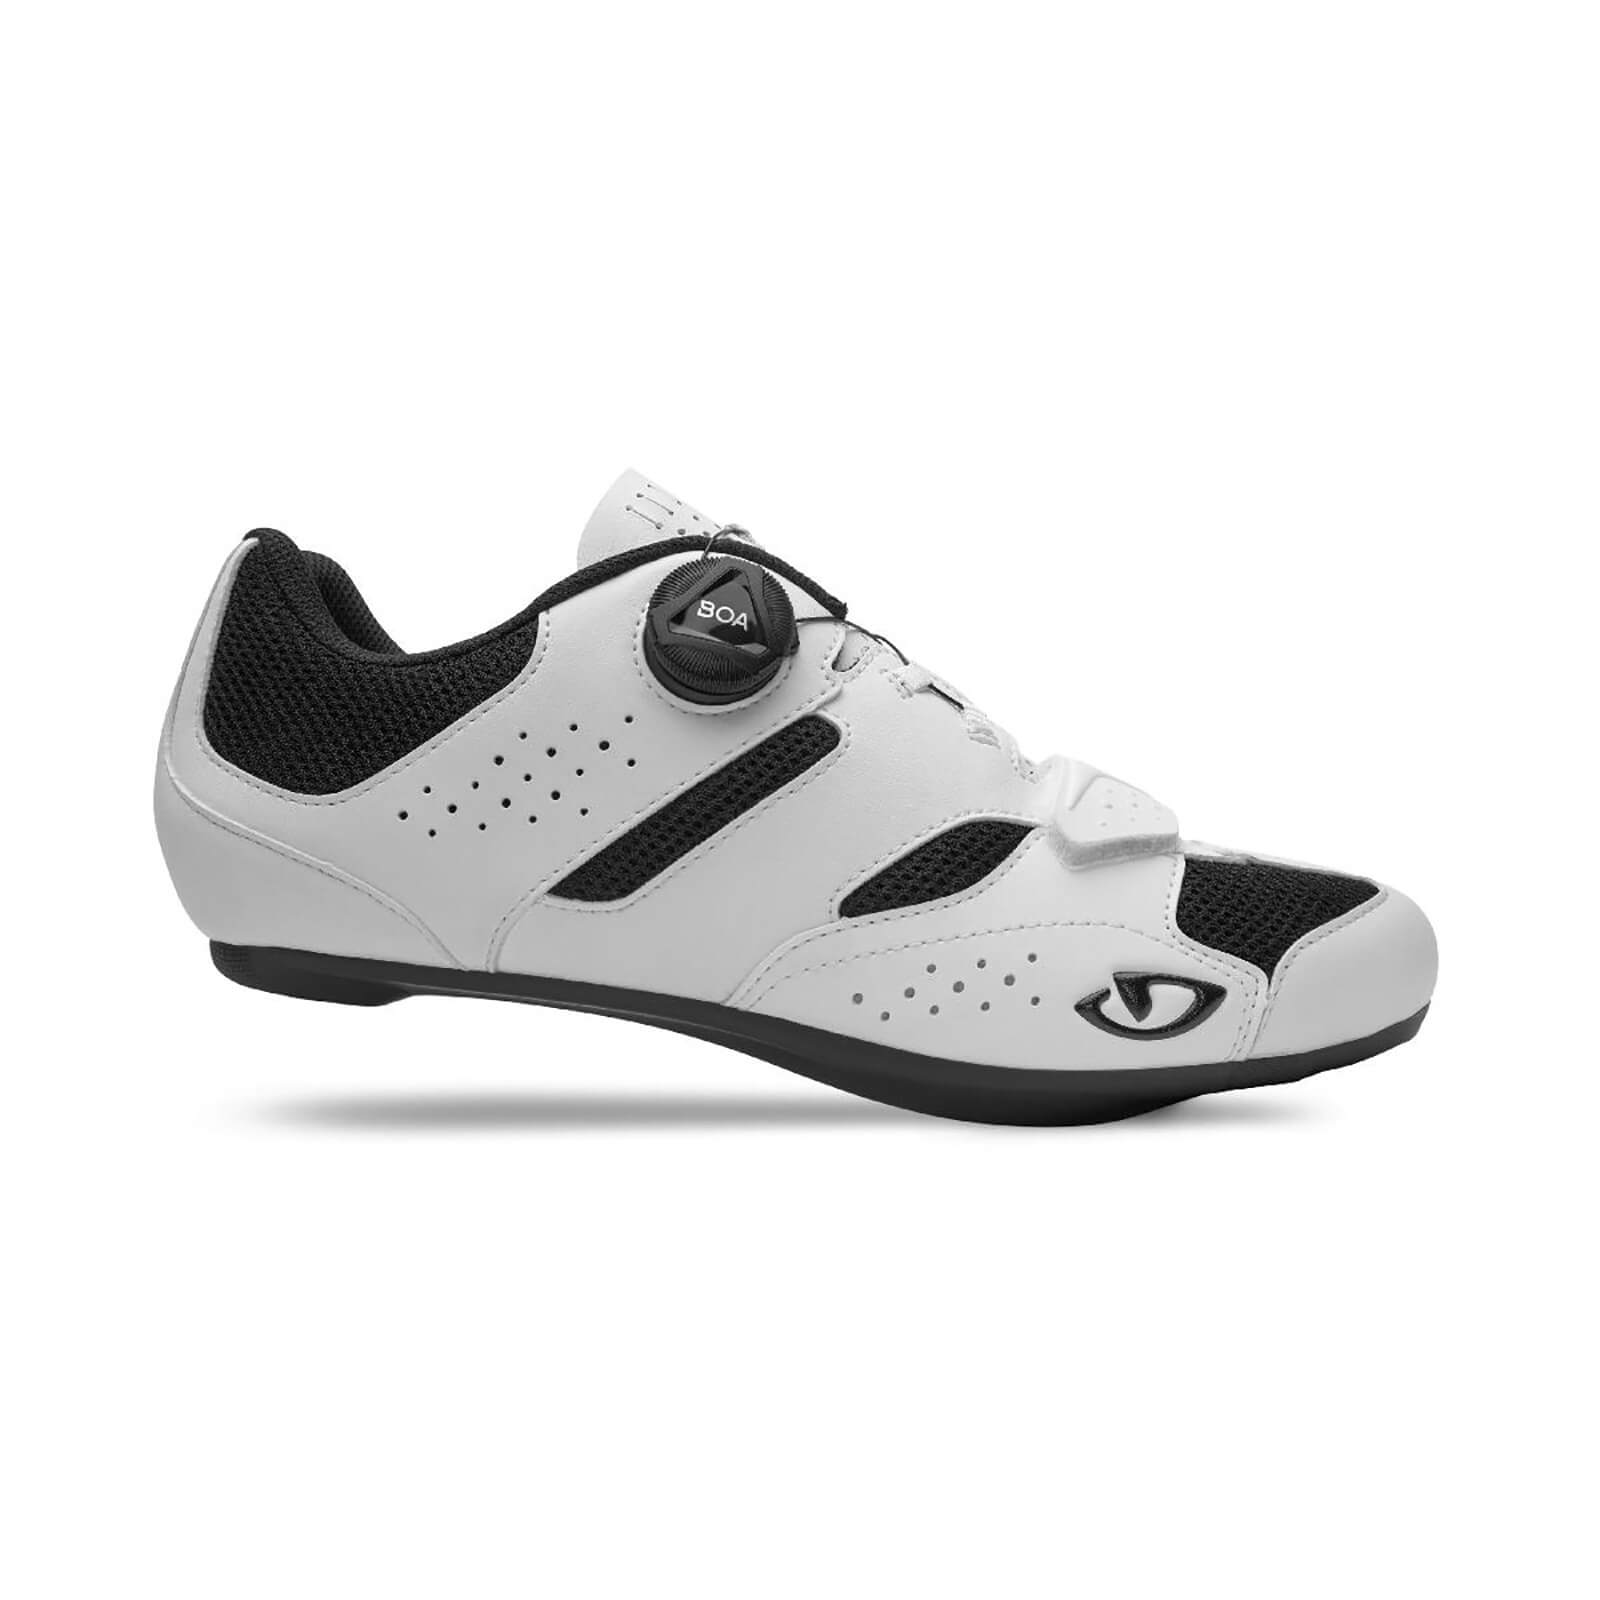 Giro Savix II Road Shoes - EU 46 - White